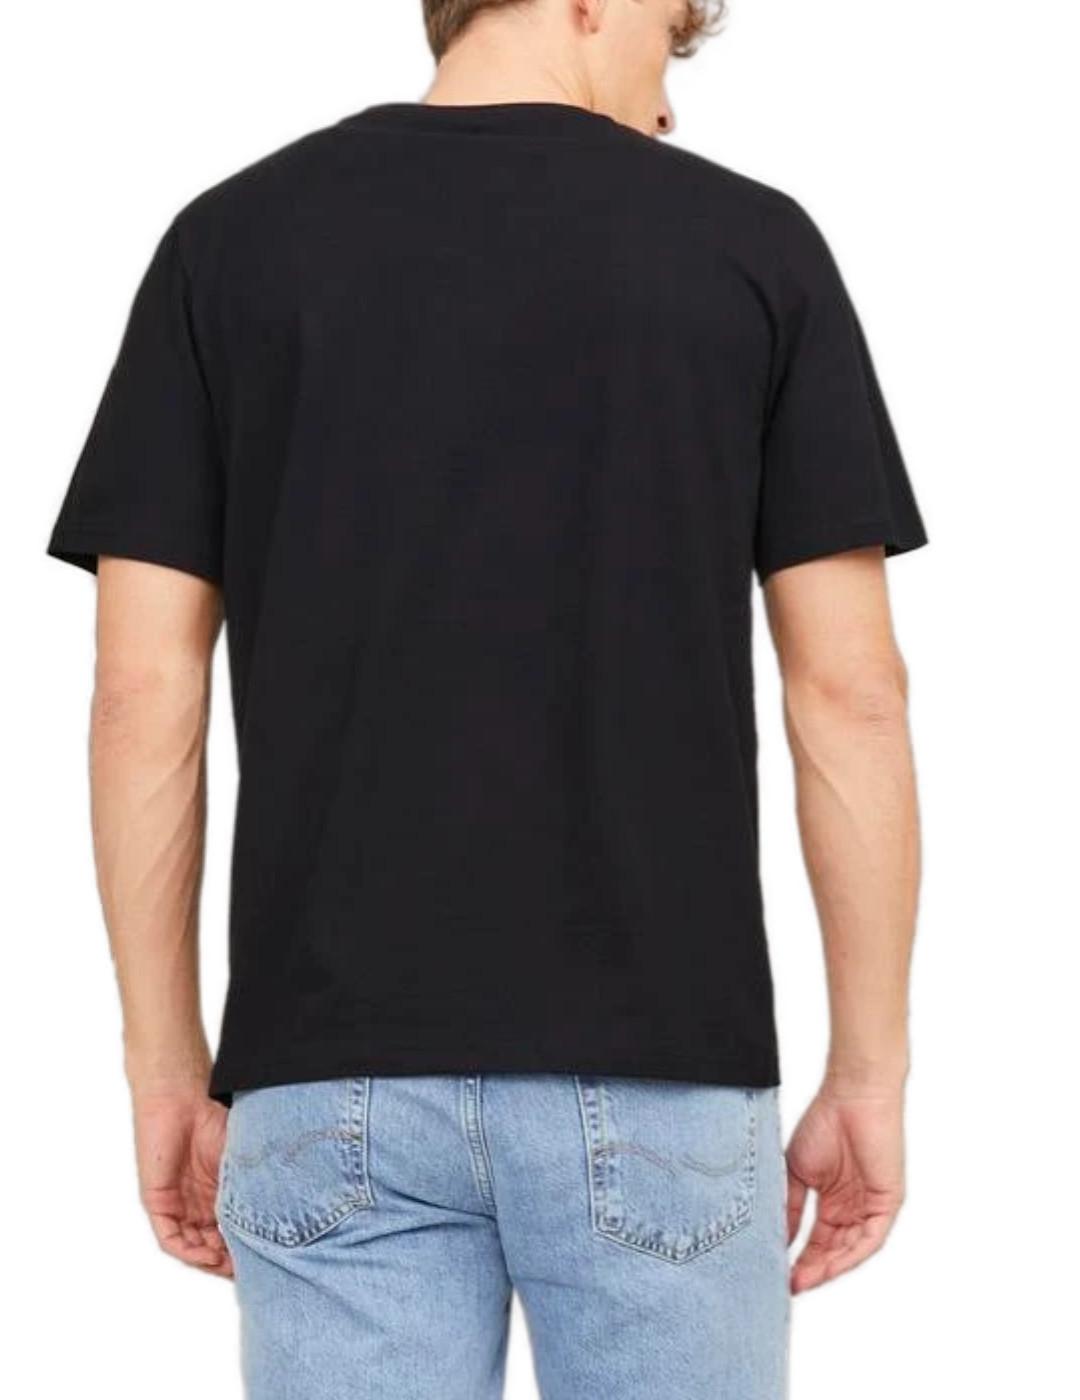 Camiseta Jack&Jones Cobin negro manga corta para hombre